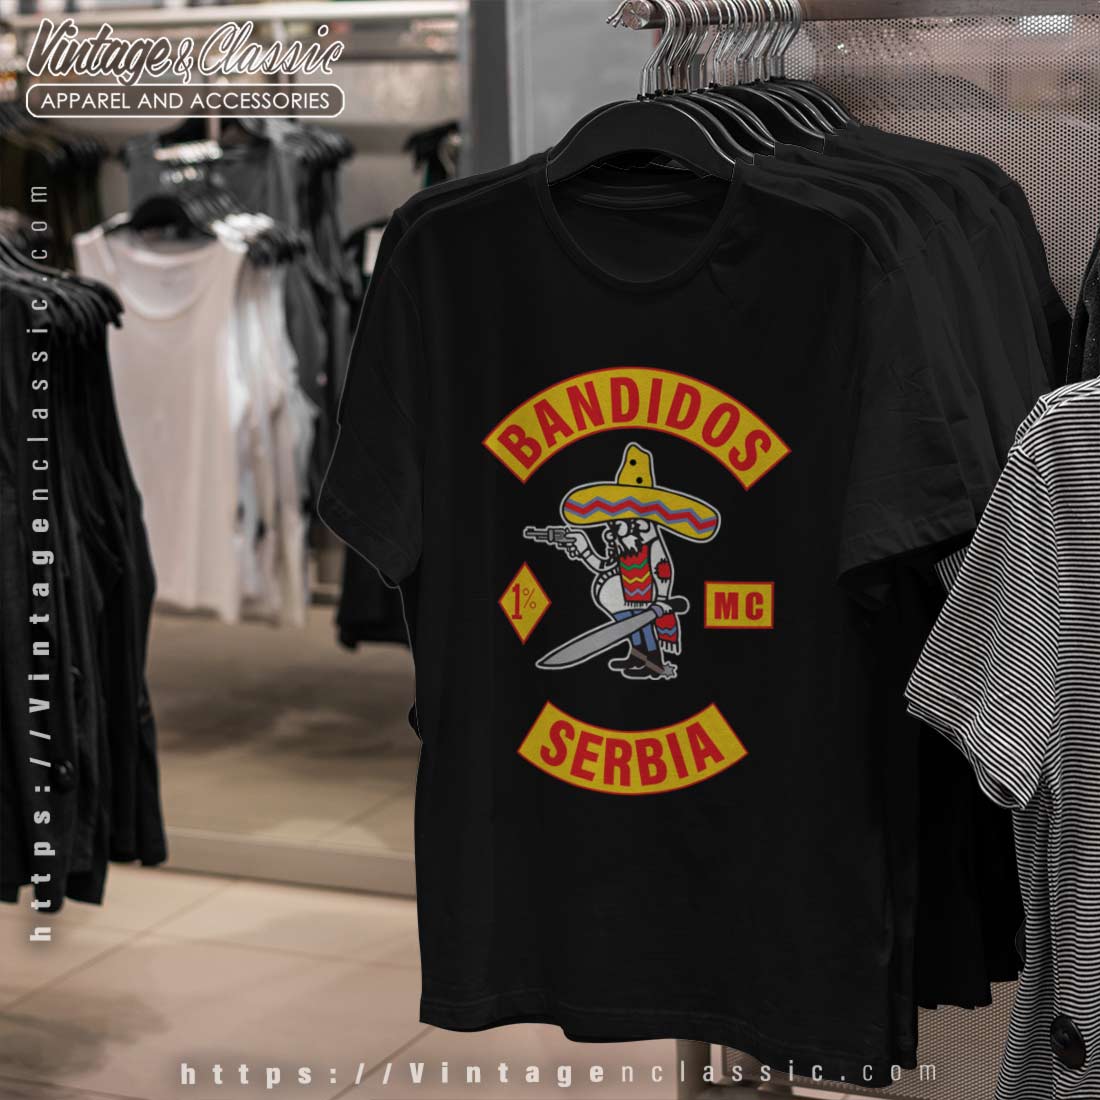 efficacy Sprinkle disgusting Bandidos MC Serbia Shirt - High-Quality Printed Brand